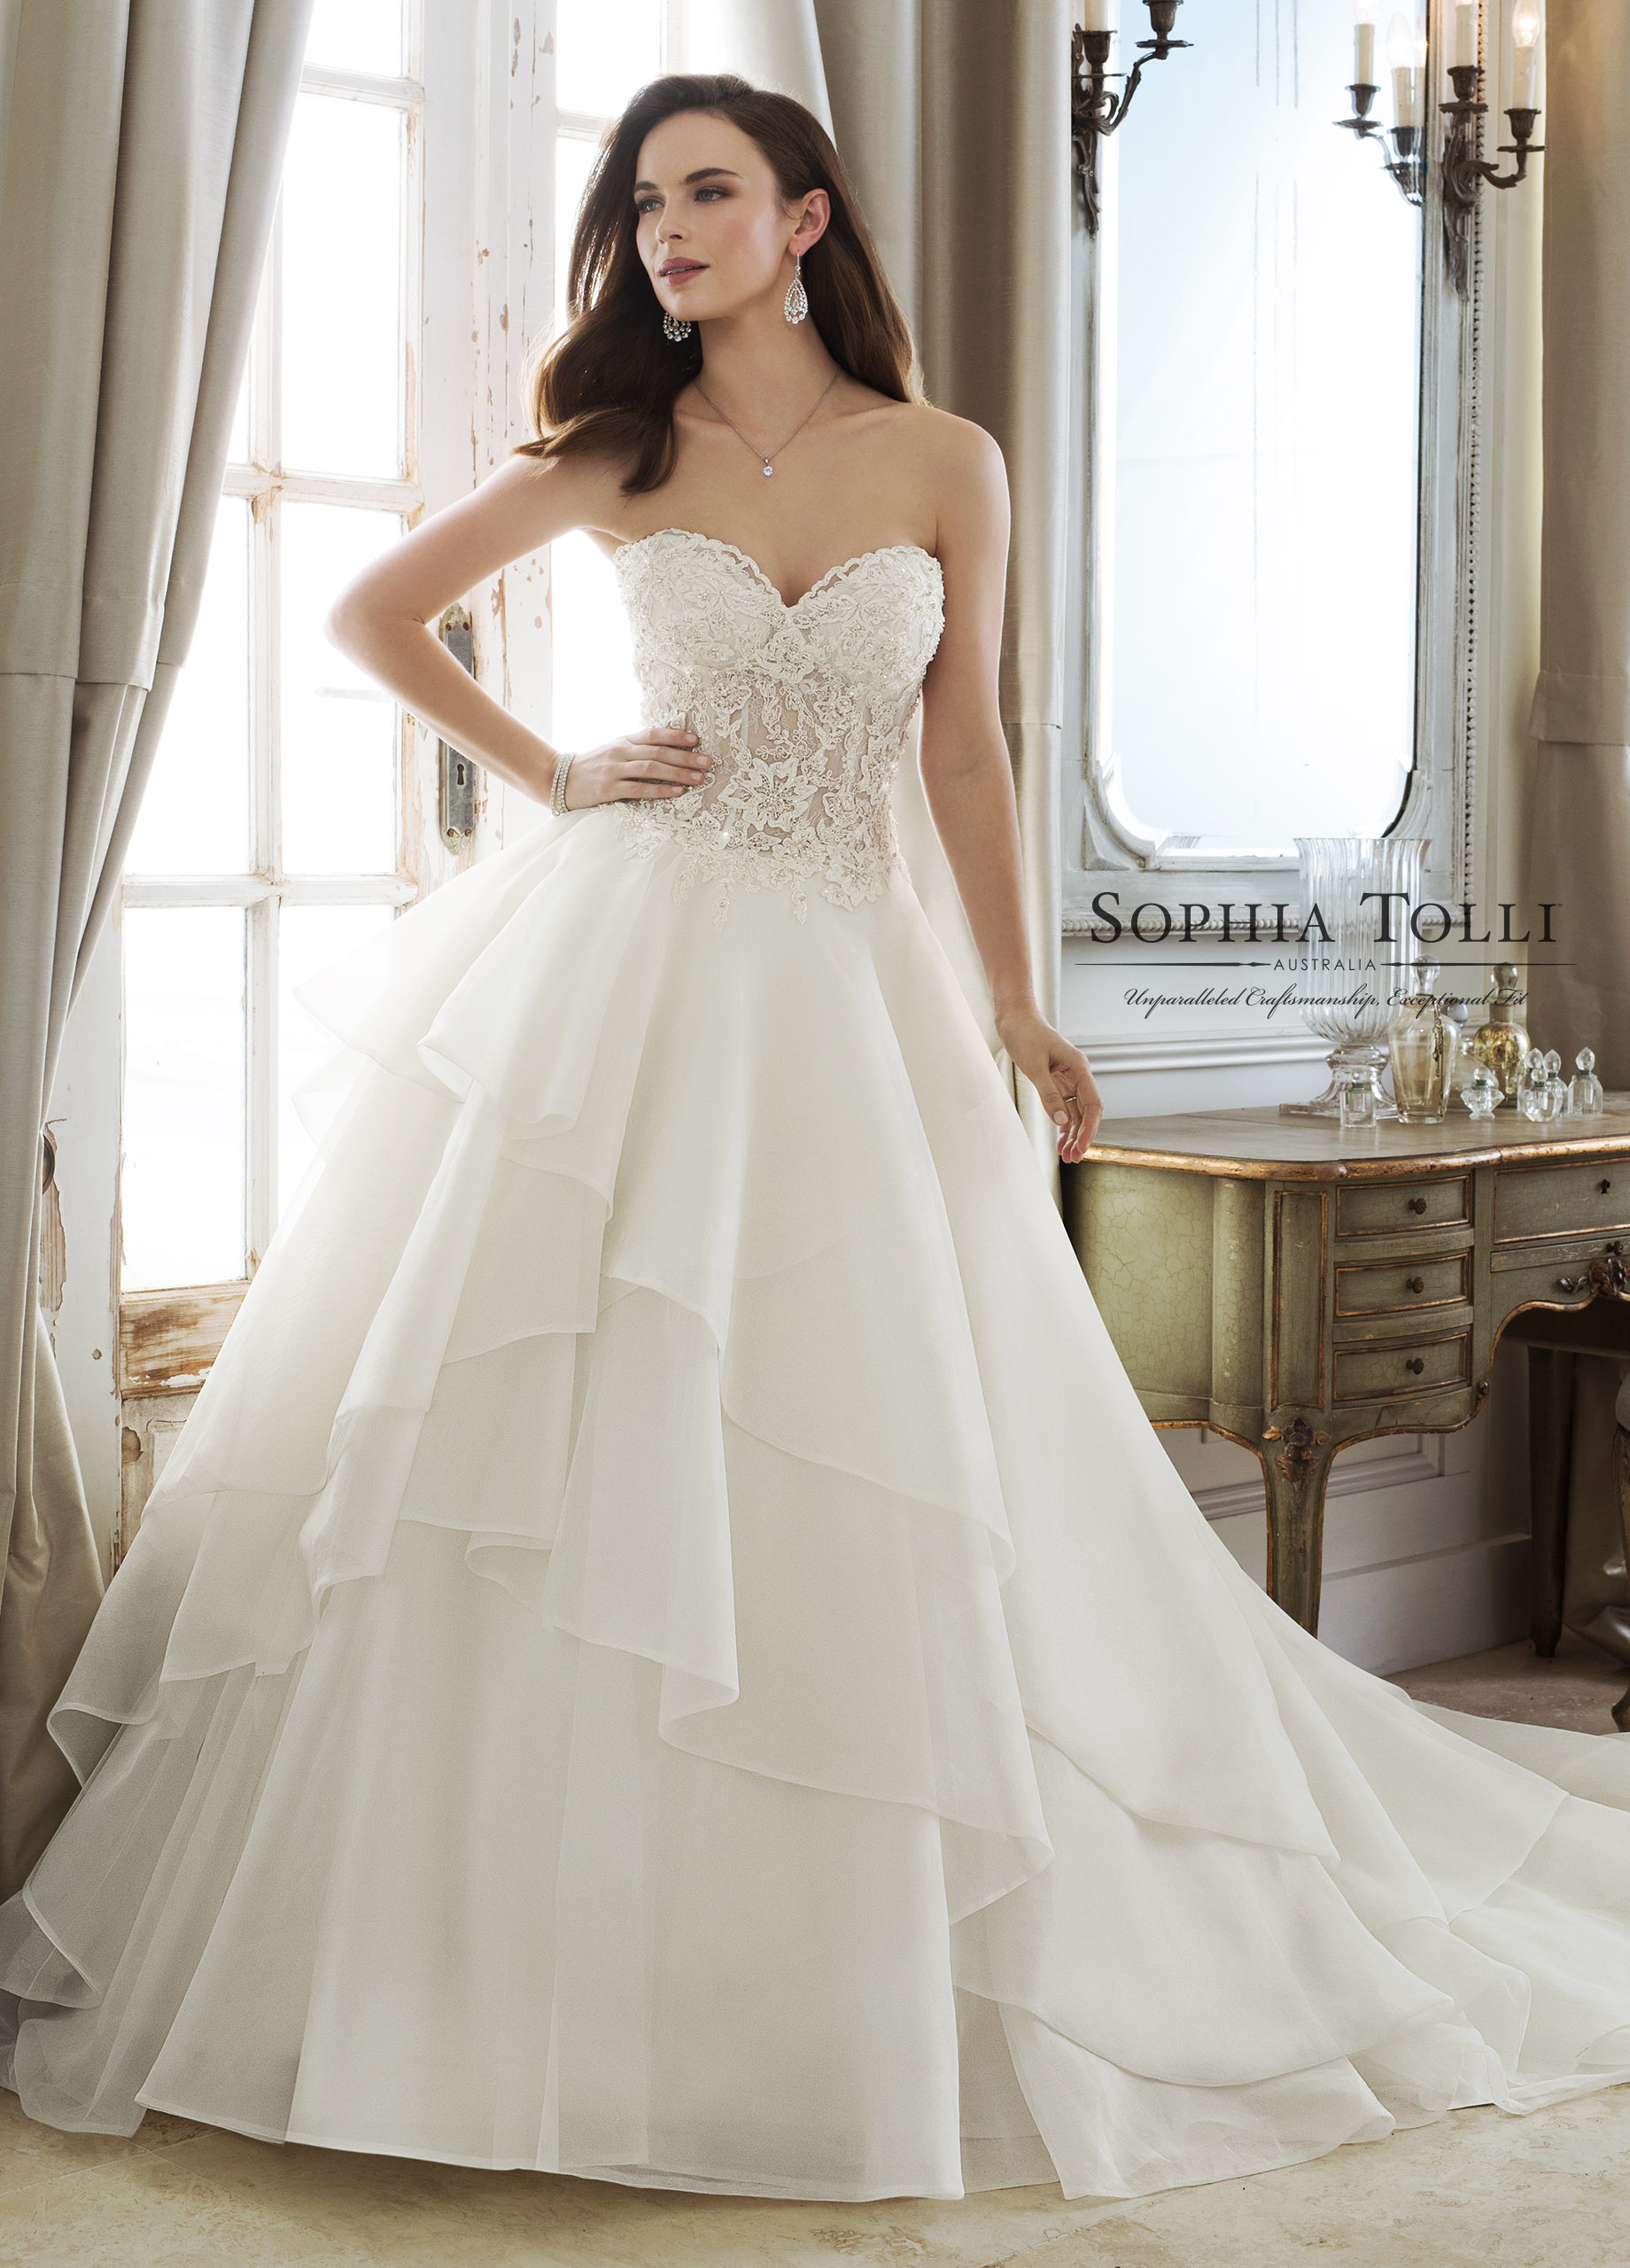 Romantic Ballgown Wedding Dress with Tiered Skirt | Sophia Tolli